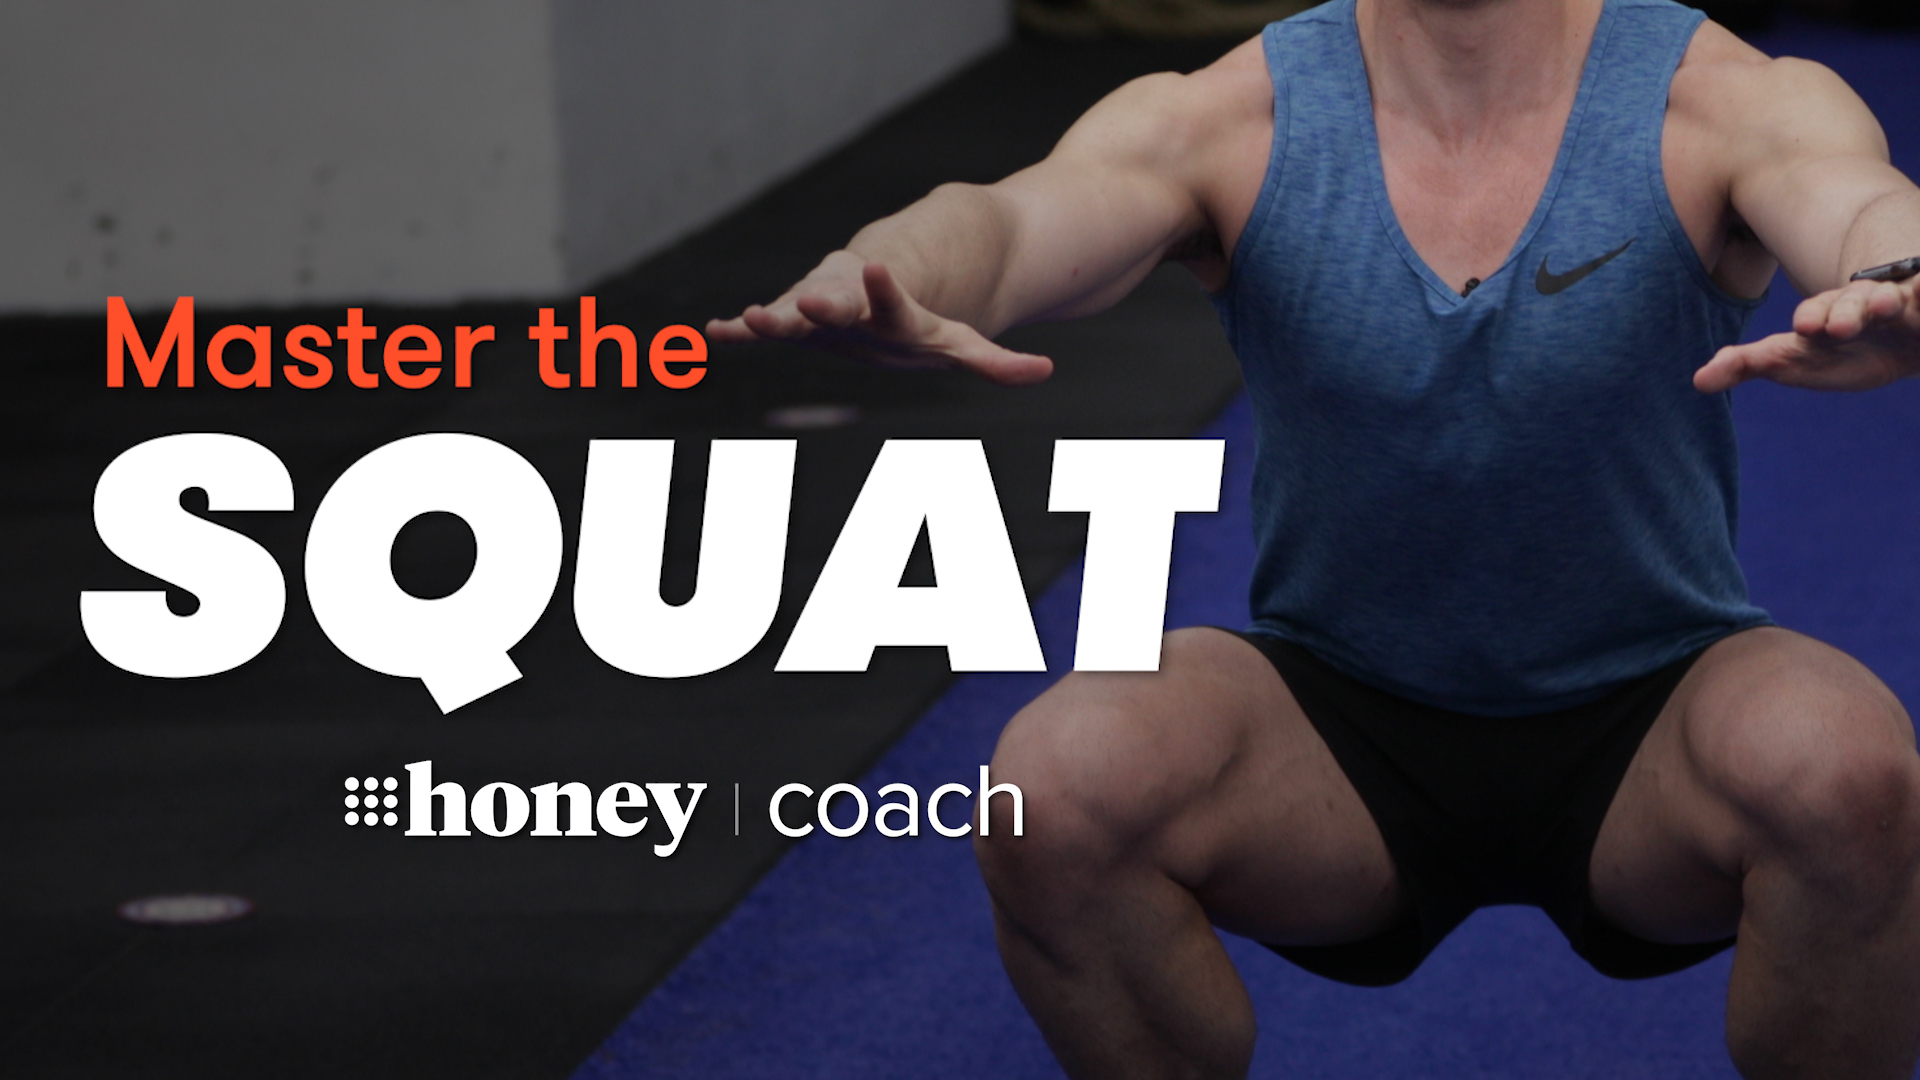 9Honey workout hacks: Squat